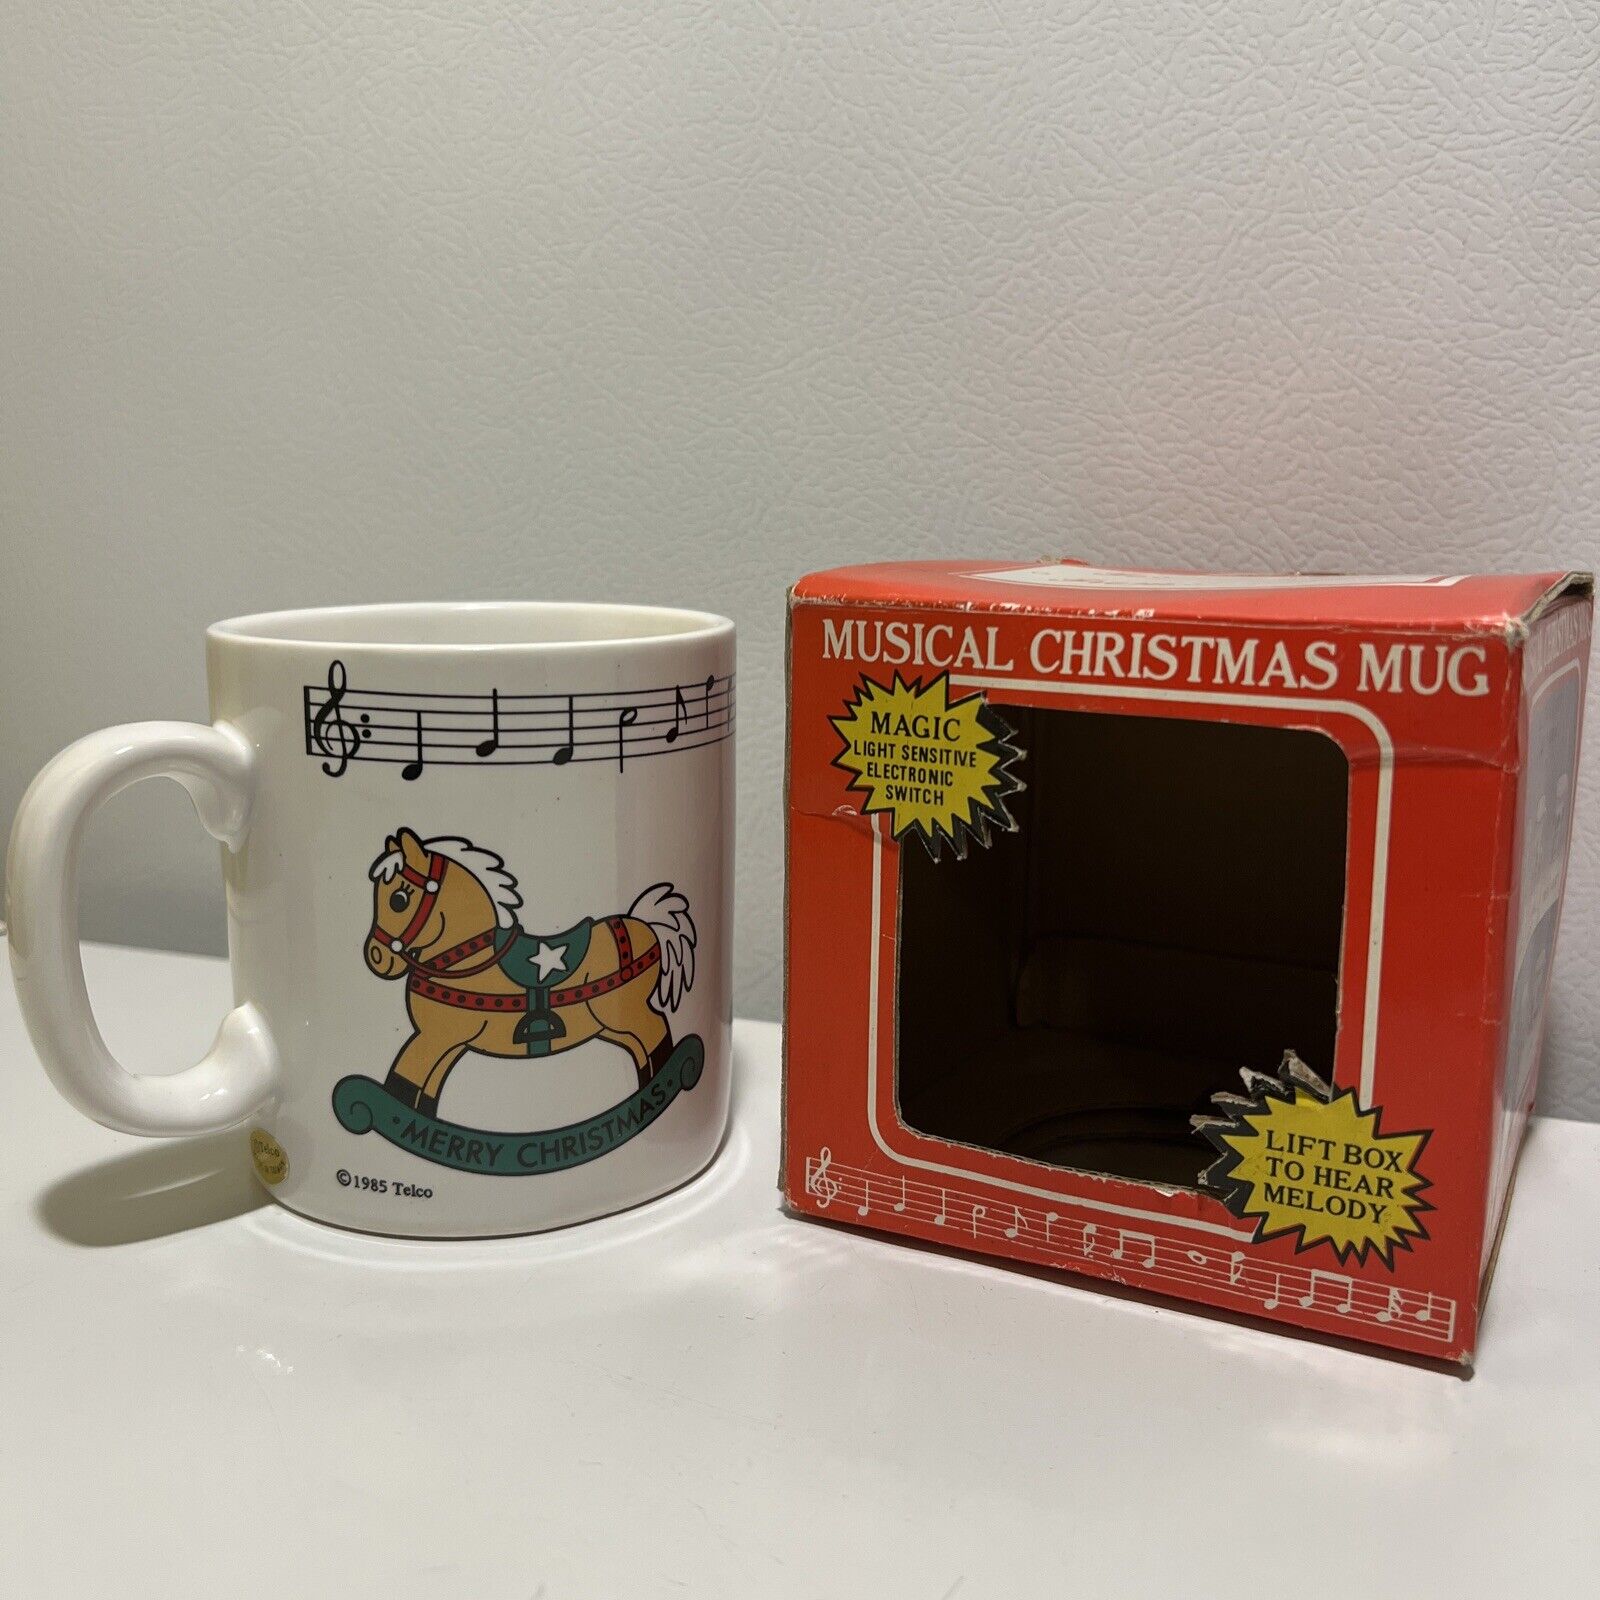 Vintage 1985 Musical Christmas Mug - Light-Sensitive Switch - WORKS